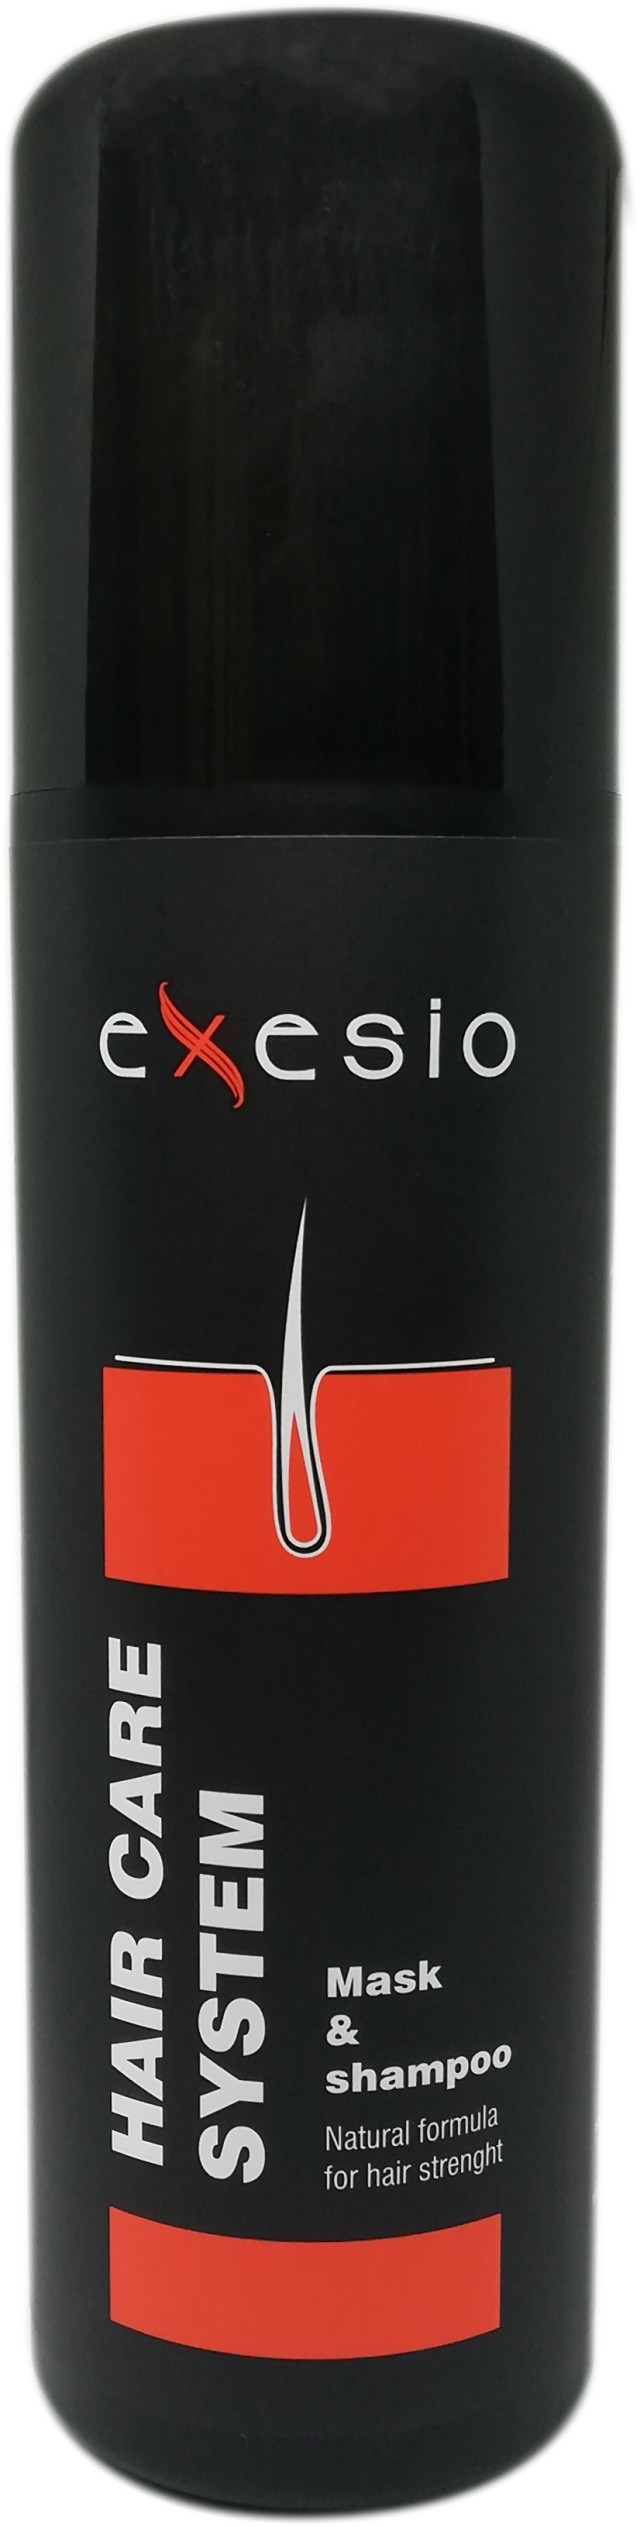 Exesio Mask - Shampoo Φυσική Φόρμουλα Ενδυνάμωσης Σαμπουάν και Μάσκα Μαλλιών 280ml